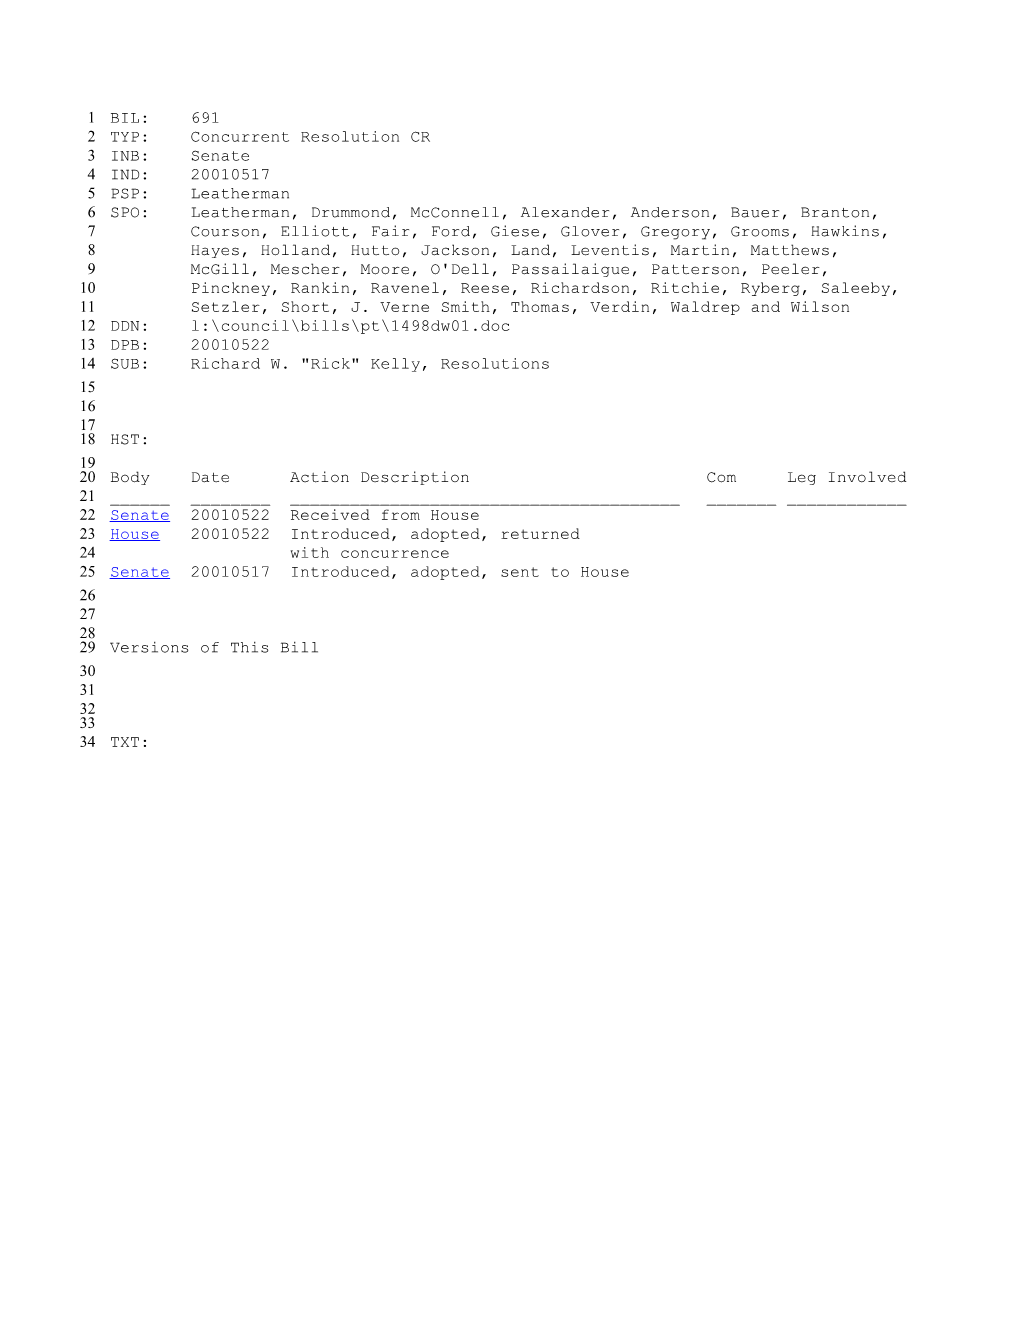 2001-2002 Bill 691: Richard W. Rick Kelly, Resolutions - South Carolina Legislature Online